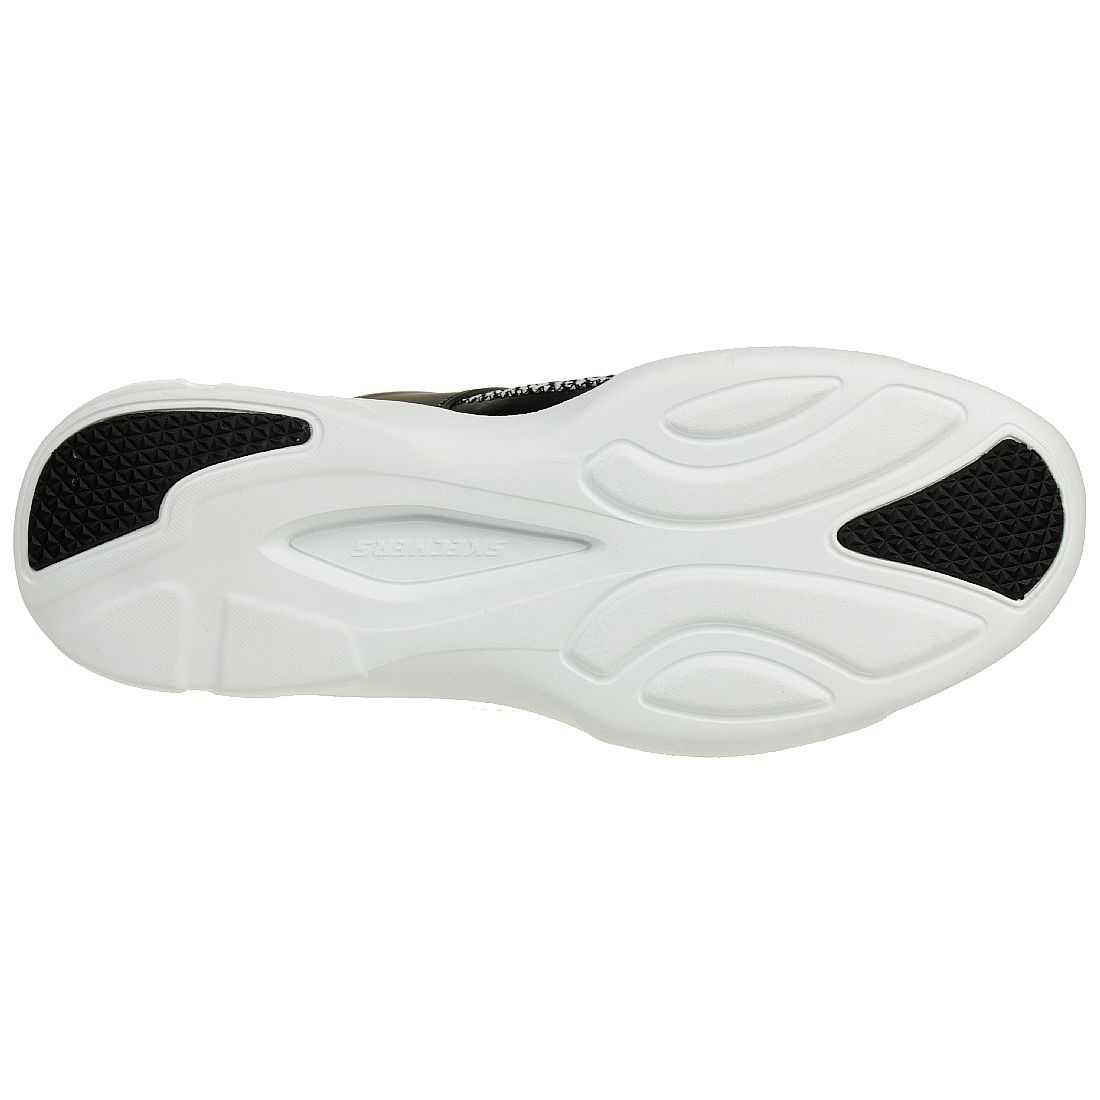 Skechers D'Lites  DLT-A Herren Air Cooled Memory Foam Sneaker Sportschuhe Trainer weiss schwarz